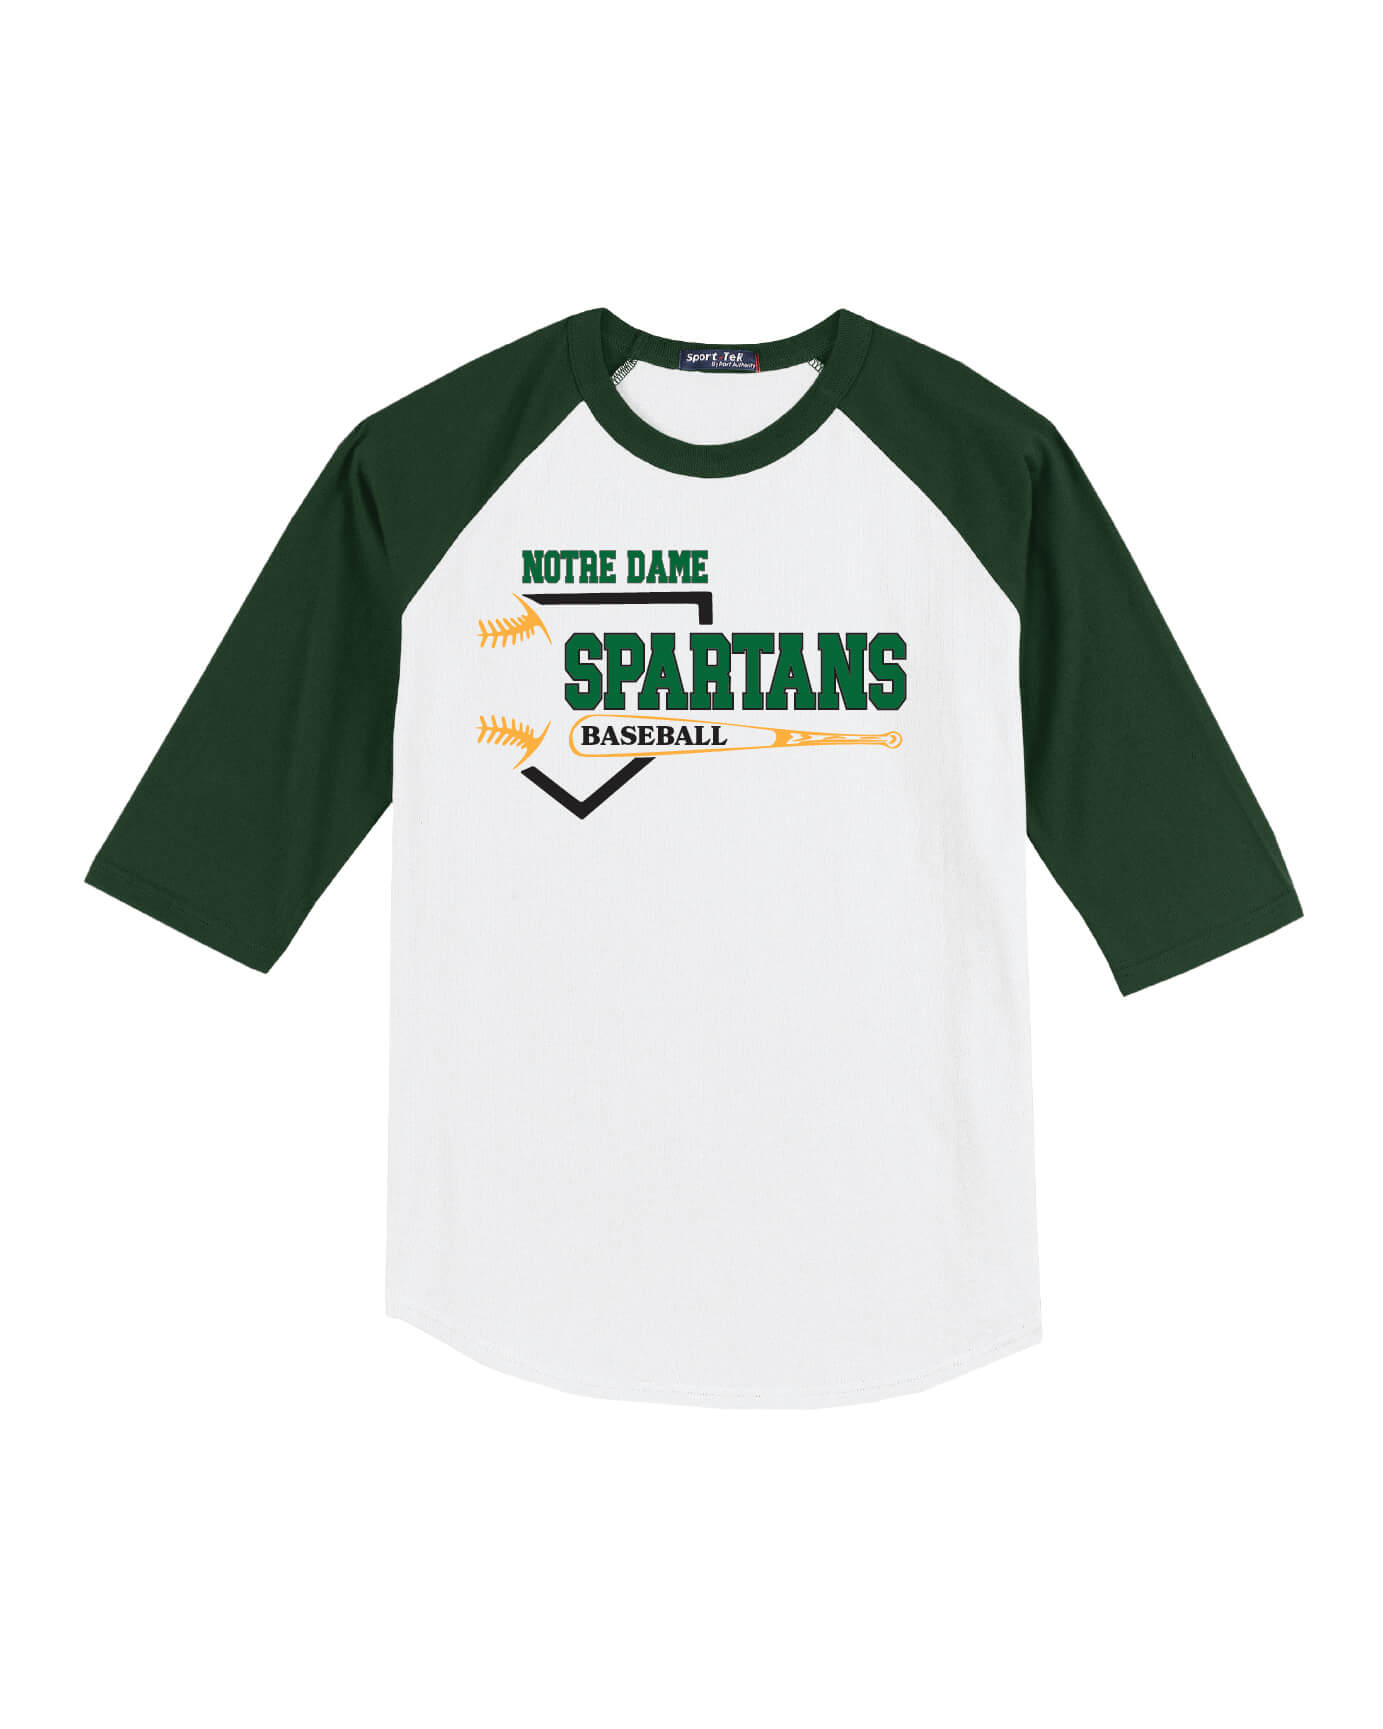 Notre Dame Spartans Sport Tek Colorblock Raglan Jersey - green/white, front